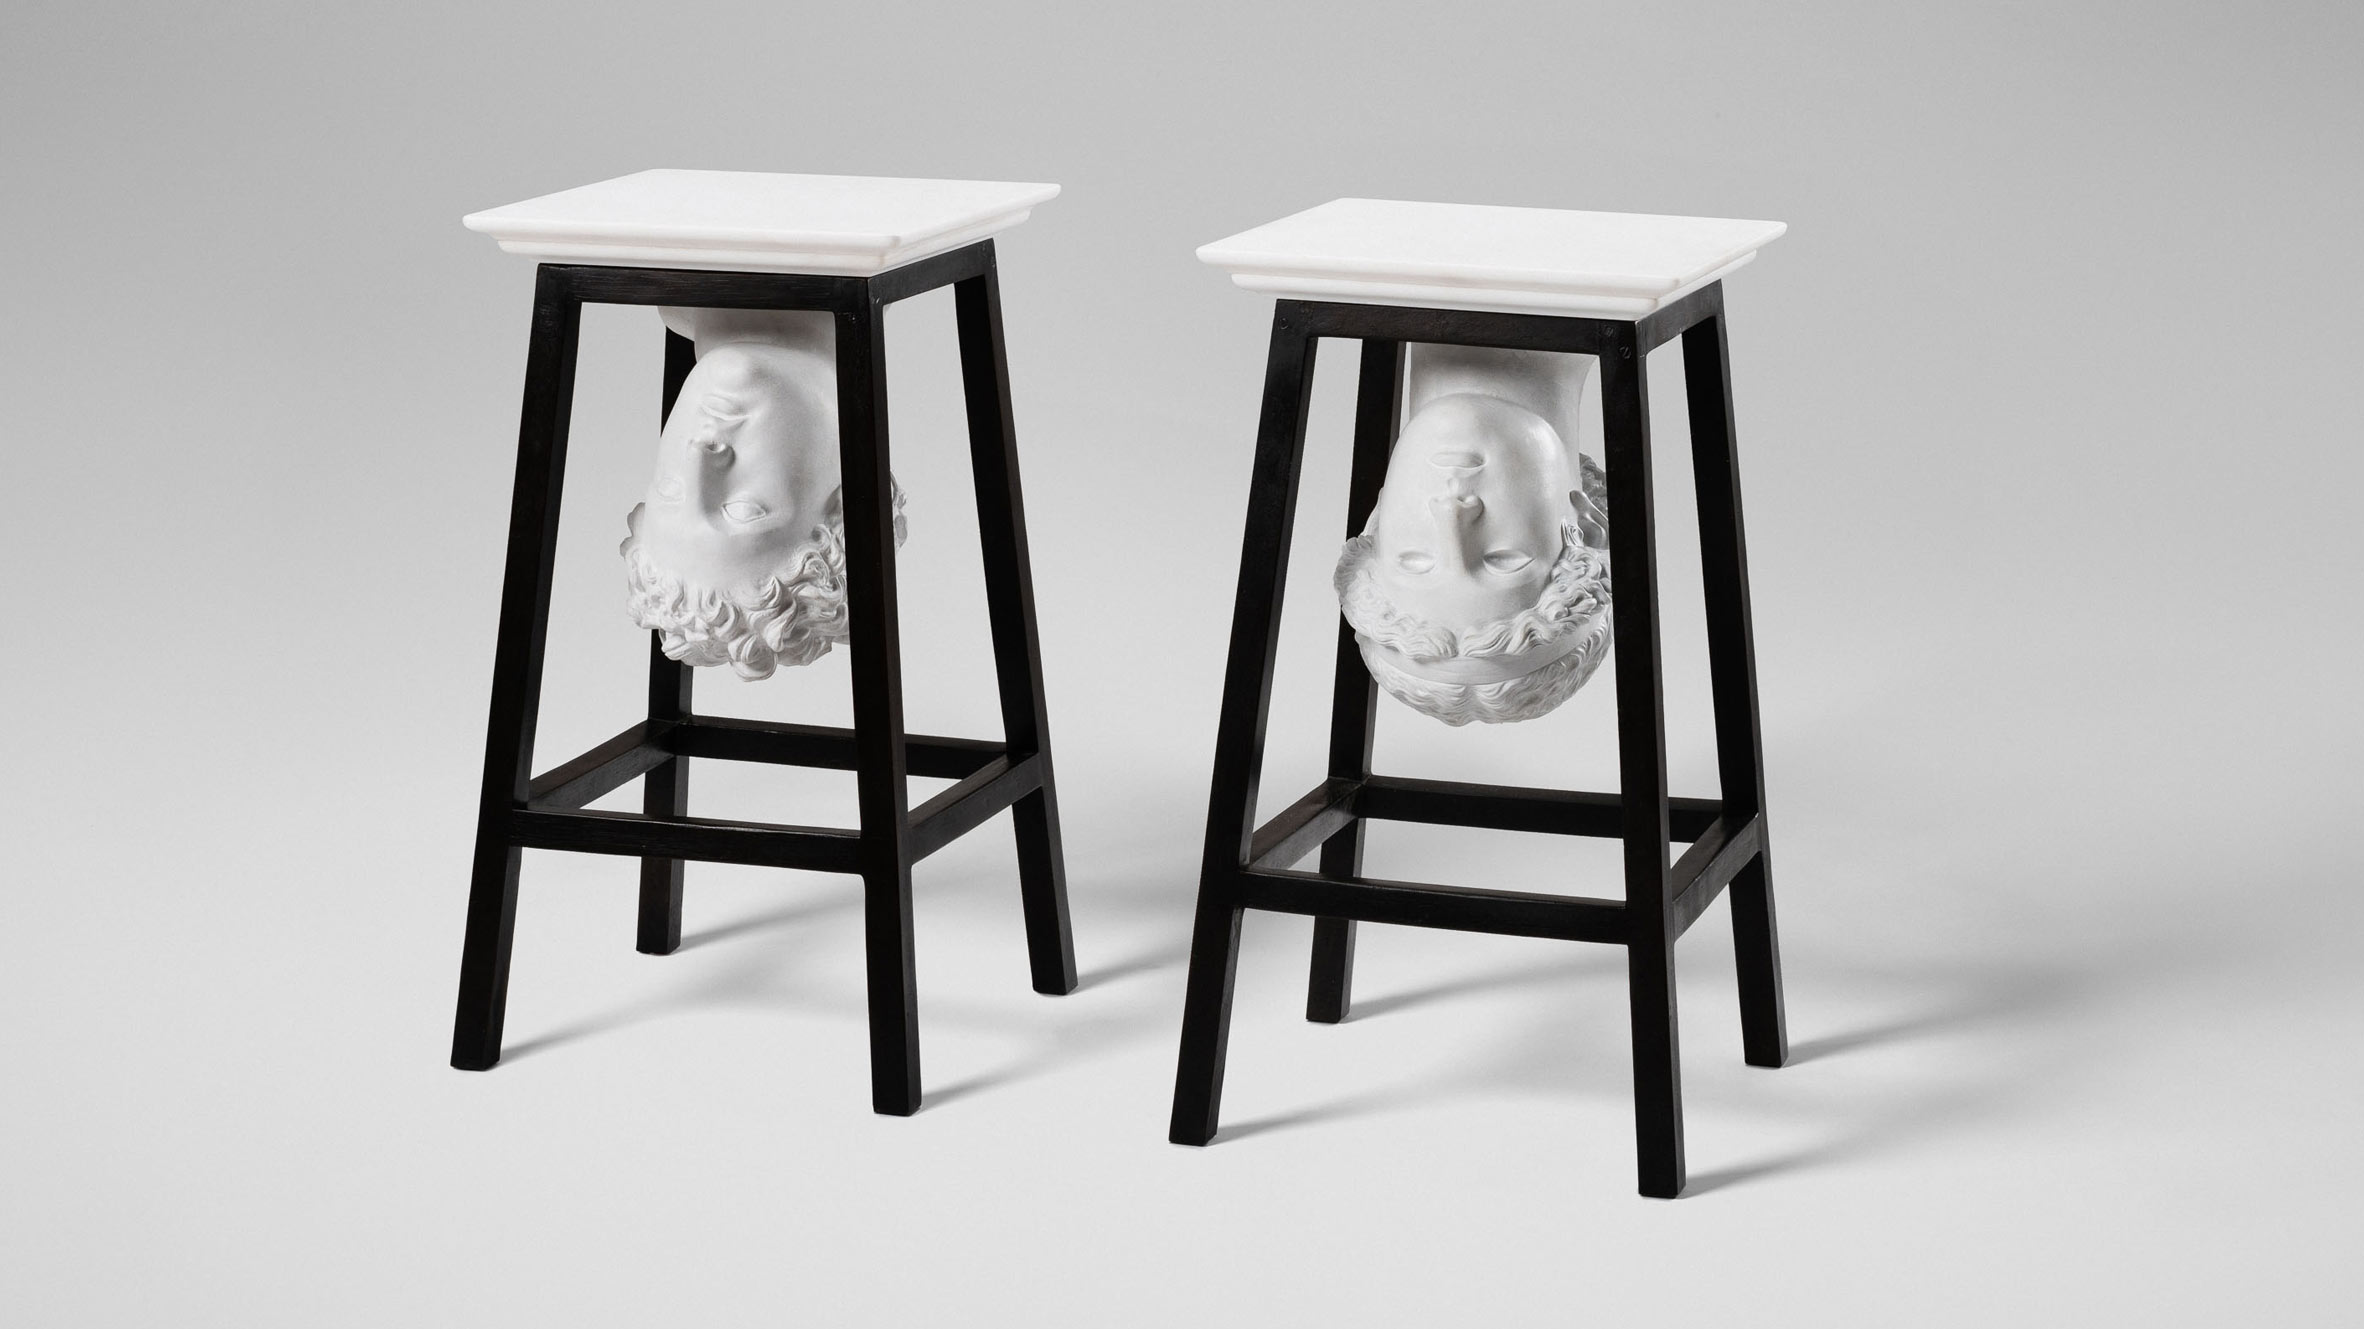 Sebastian Errazuriz "steals" classical artworks to create furniture